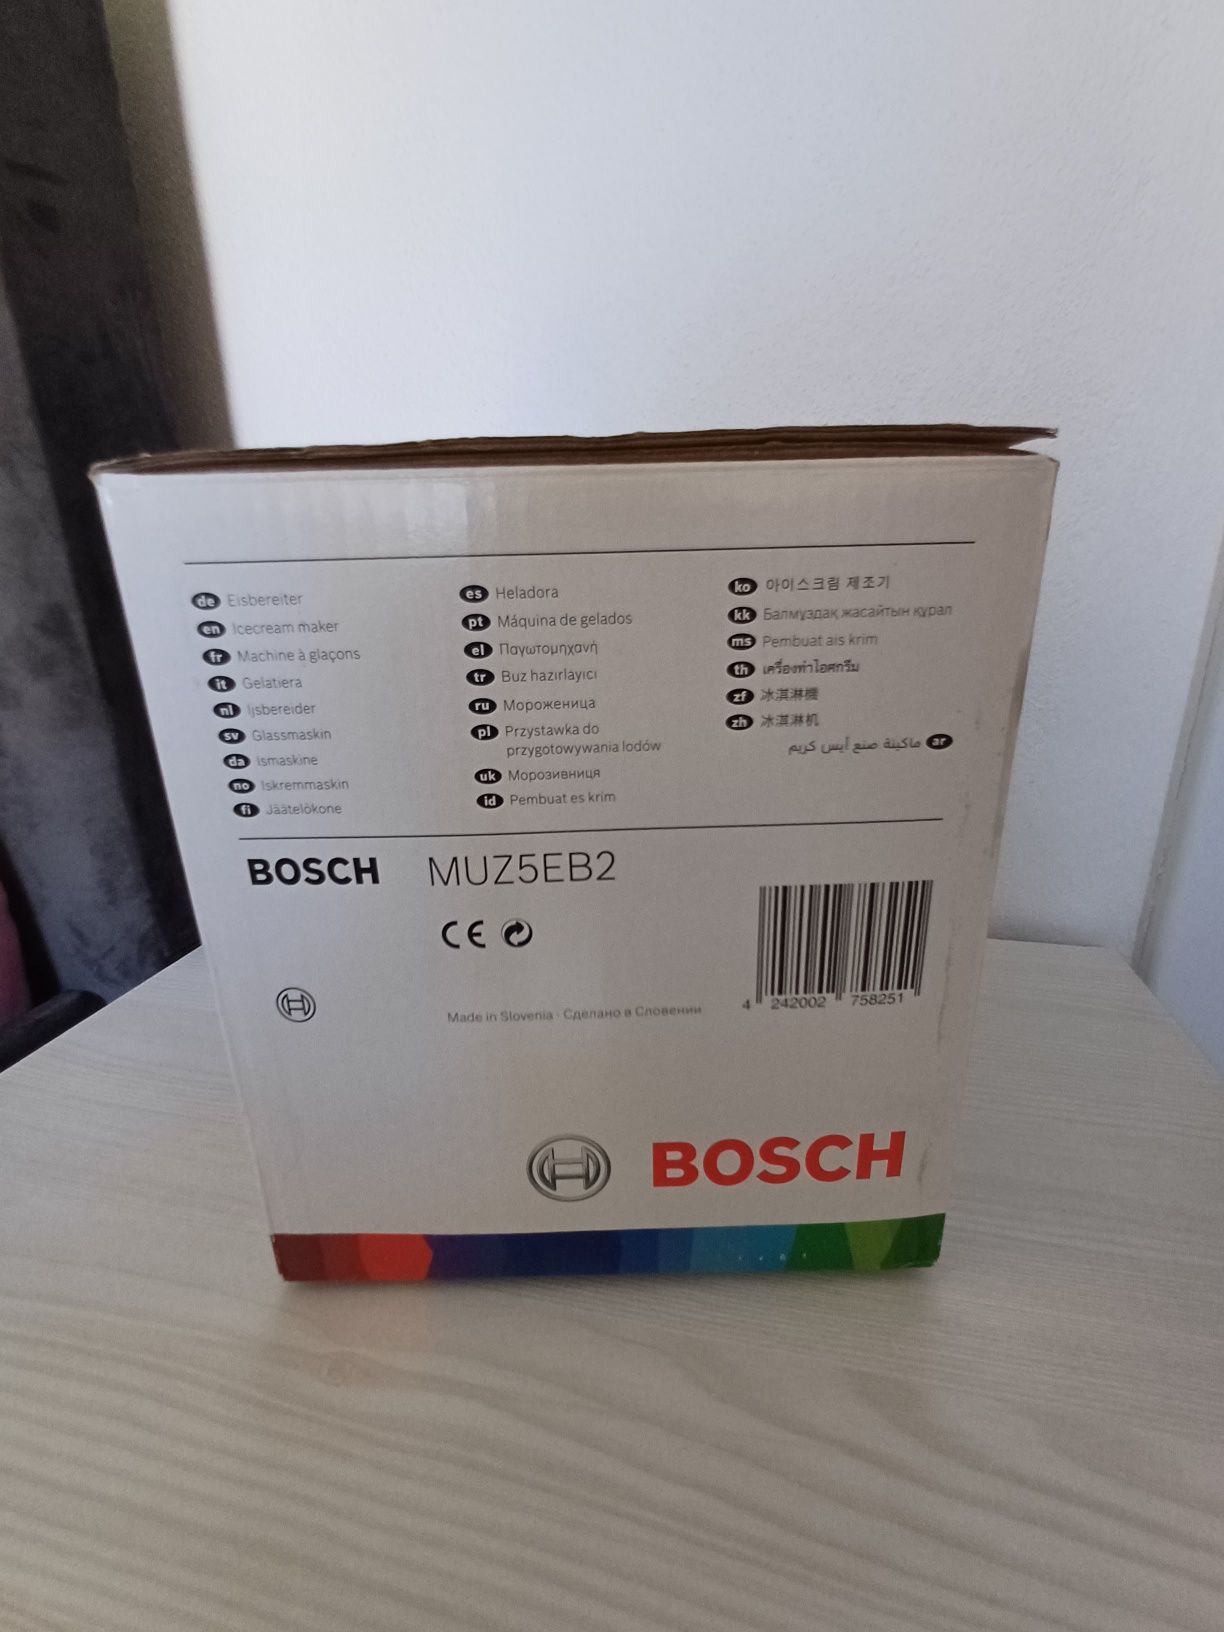 Bosch mum Muz5eb2 nowy